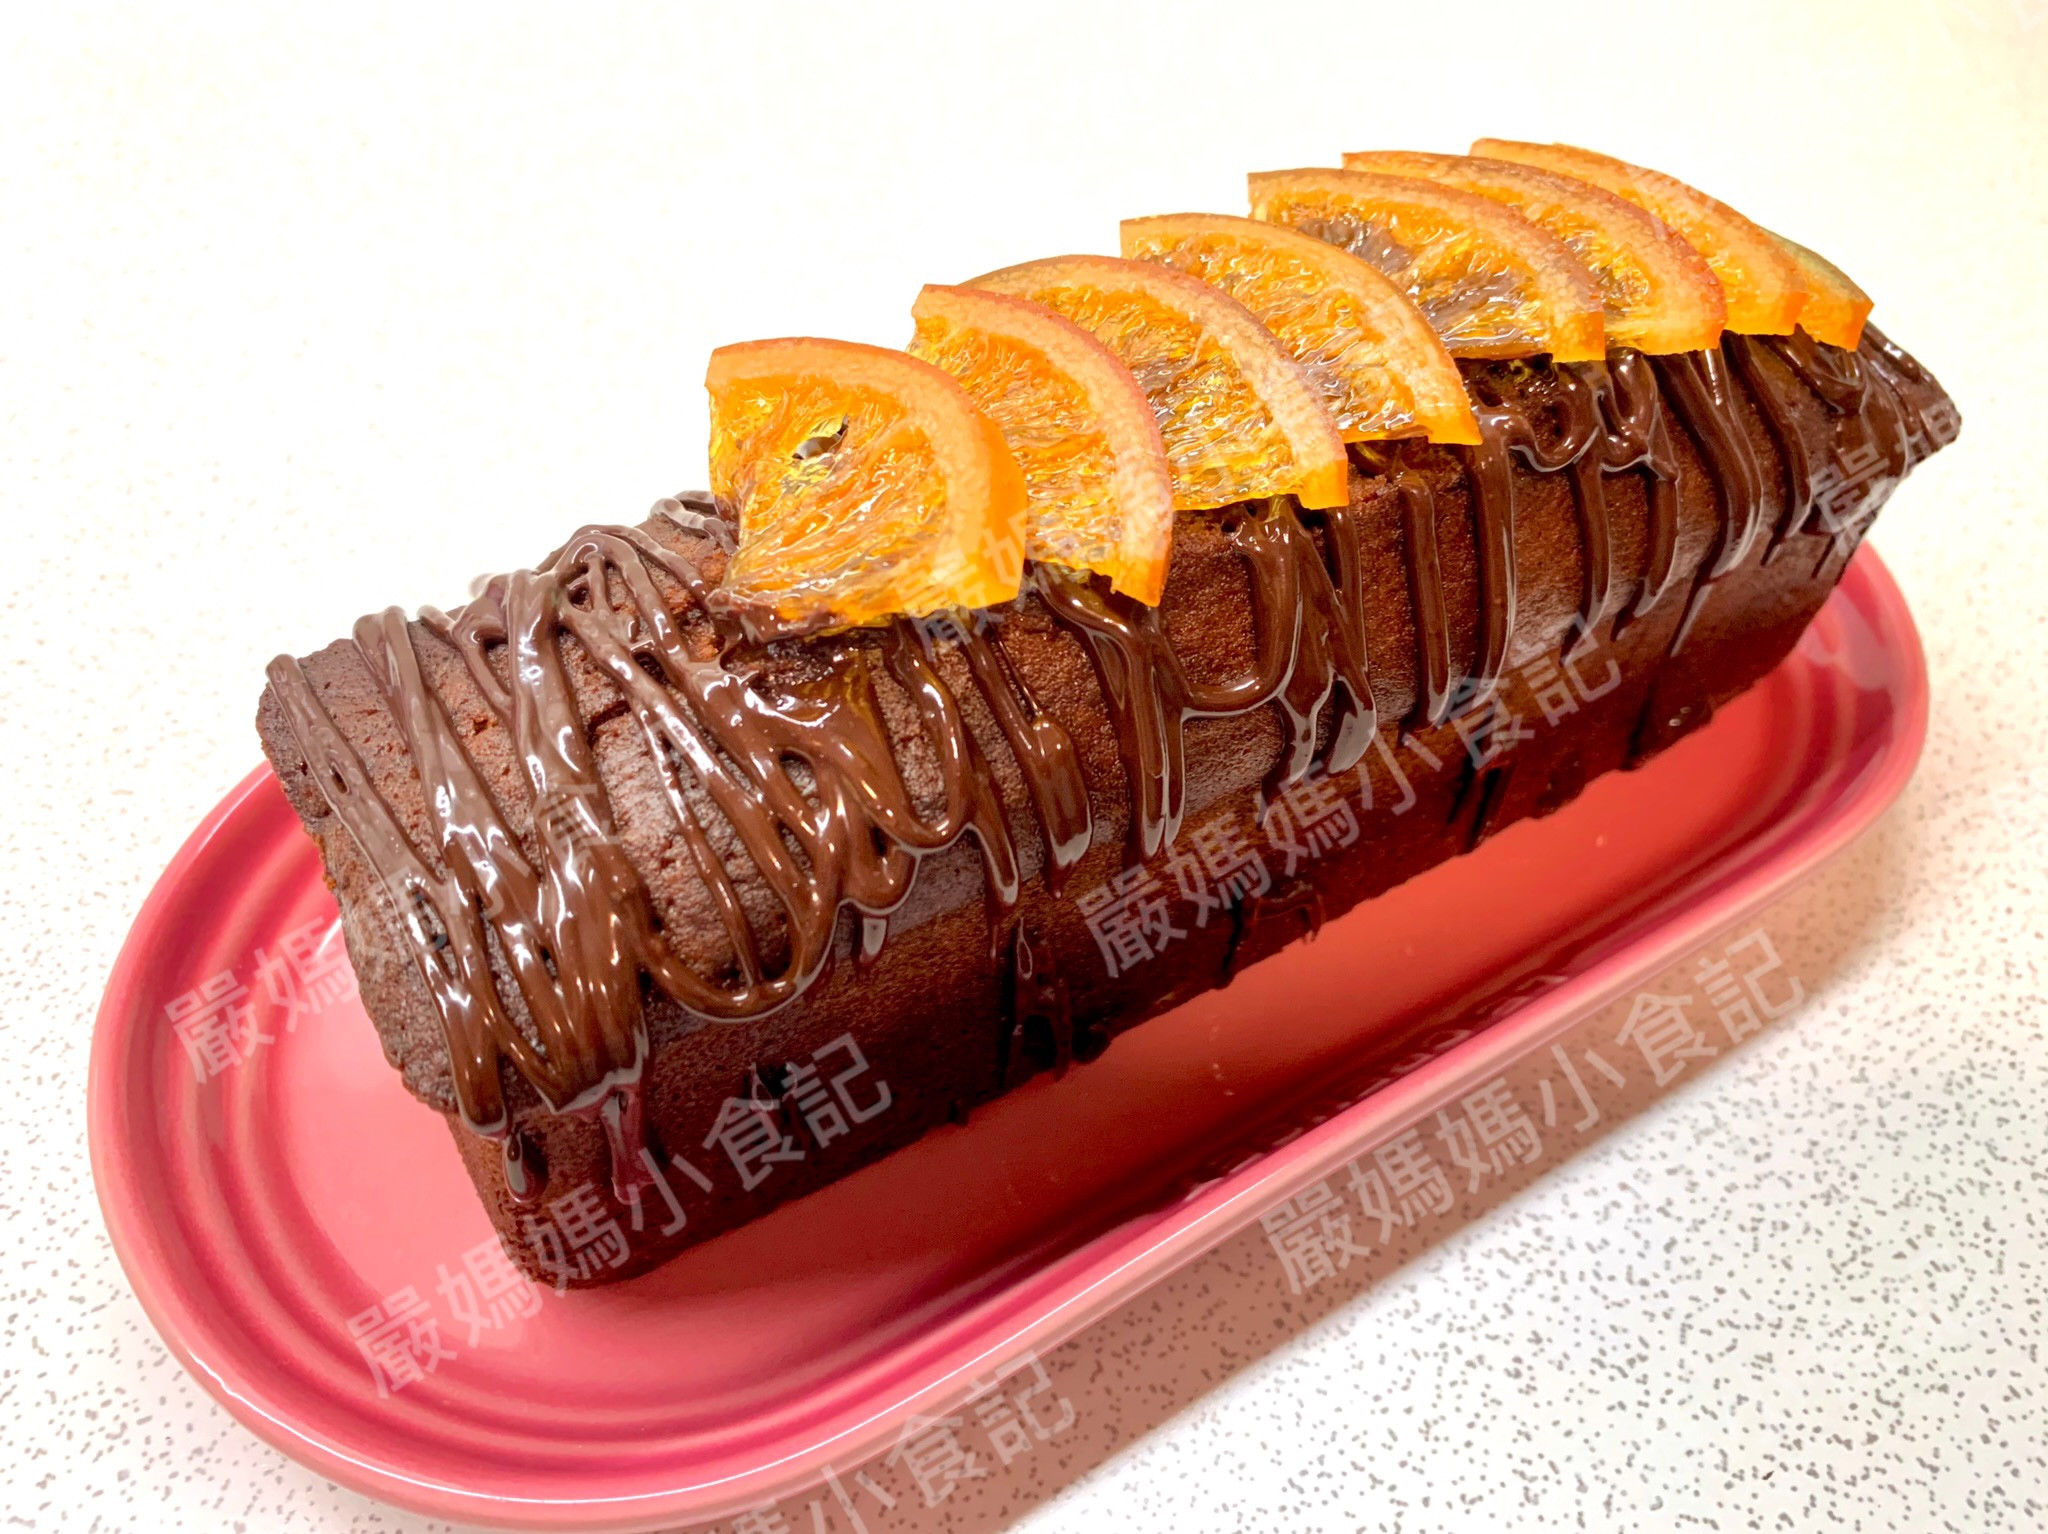 《LADUREE百年糕點老舖的傳奇配方》 P.302 鬆軟香橙蛋糕 - 包子生日蛋糕三部曲 (包子的崛起)